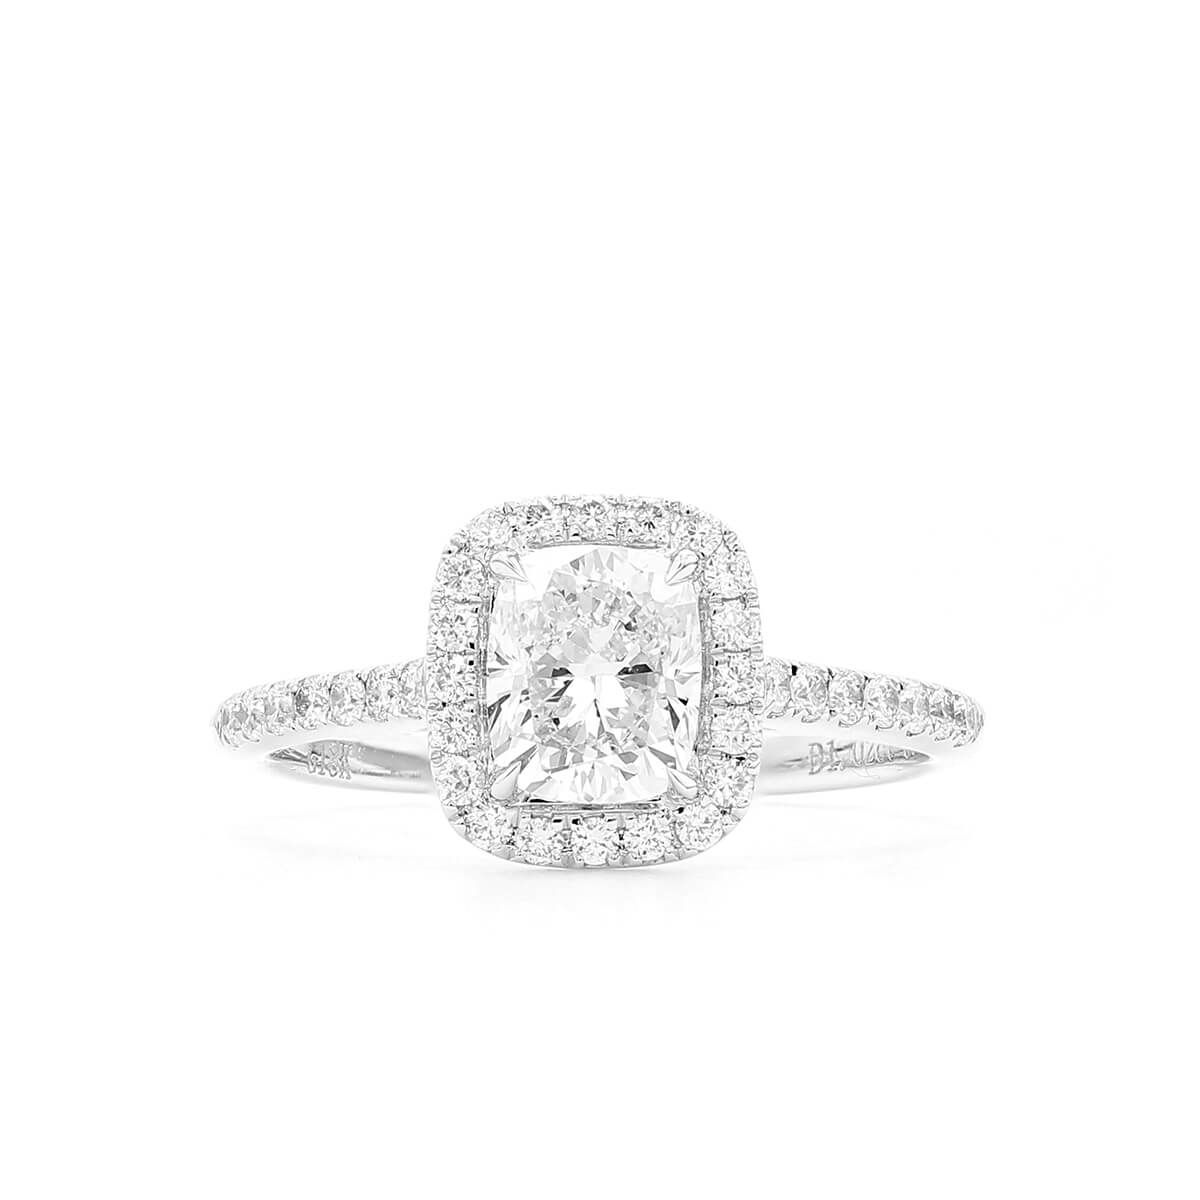  White Diamond Ring, 1.02 Ct. (1.30 Ct. TW), Cushion shape, GIA Certified, 7283259698